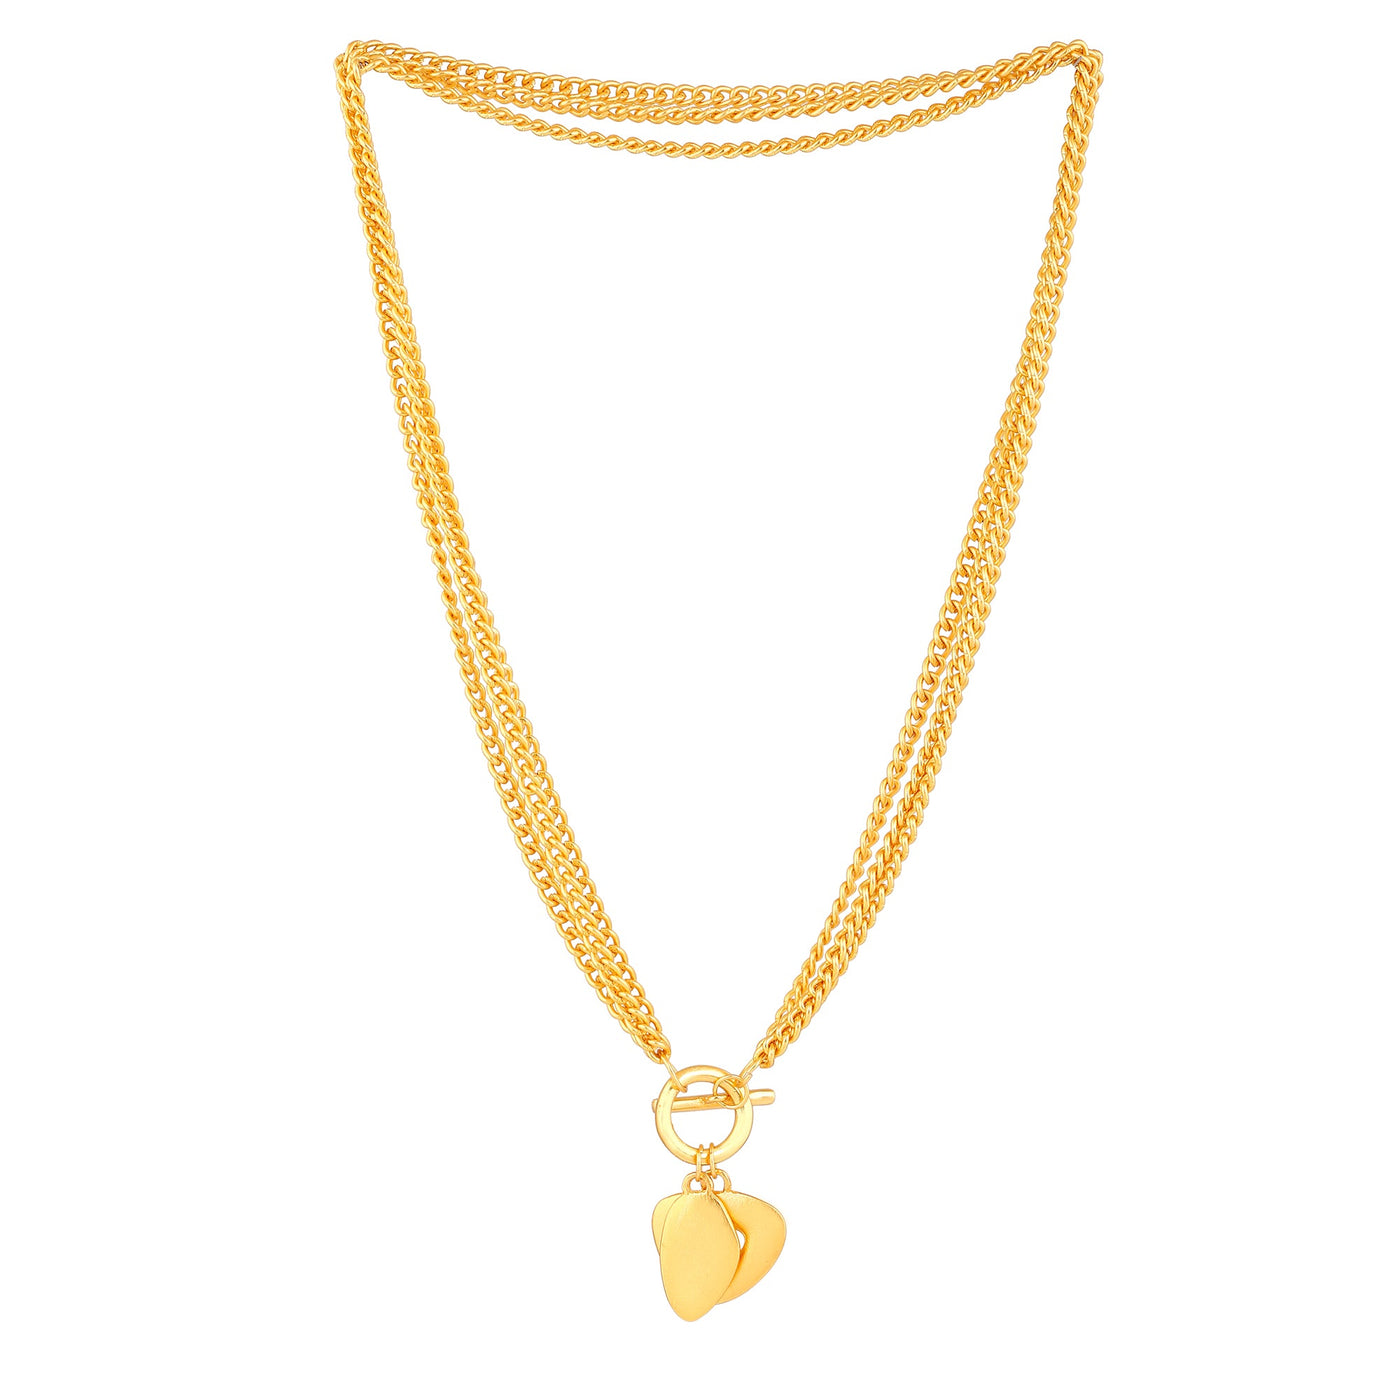 Estele Gold Plated Charm Designer Necklace Set for Women